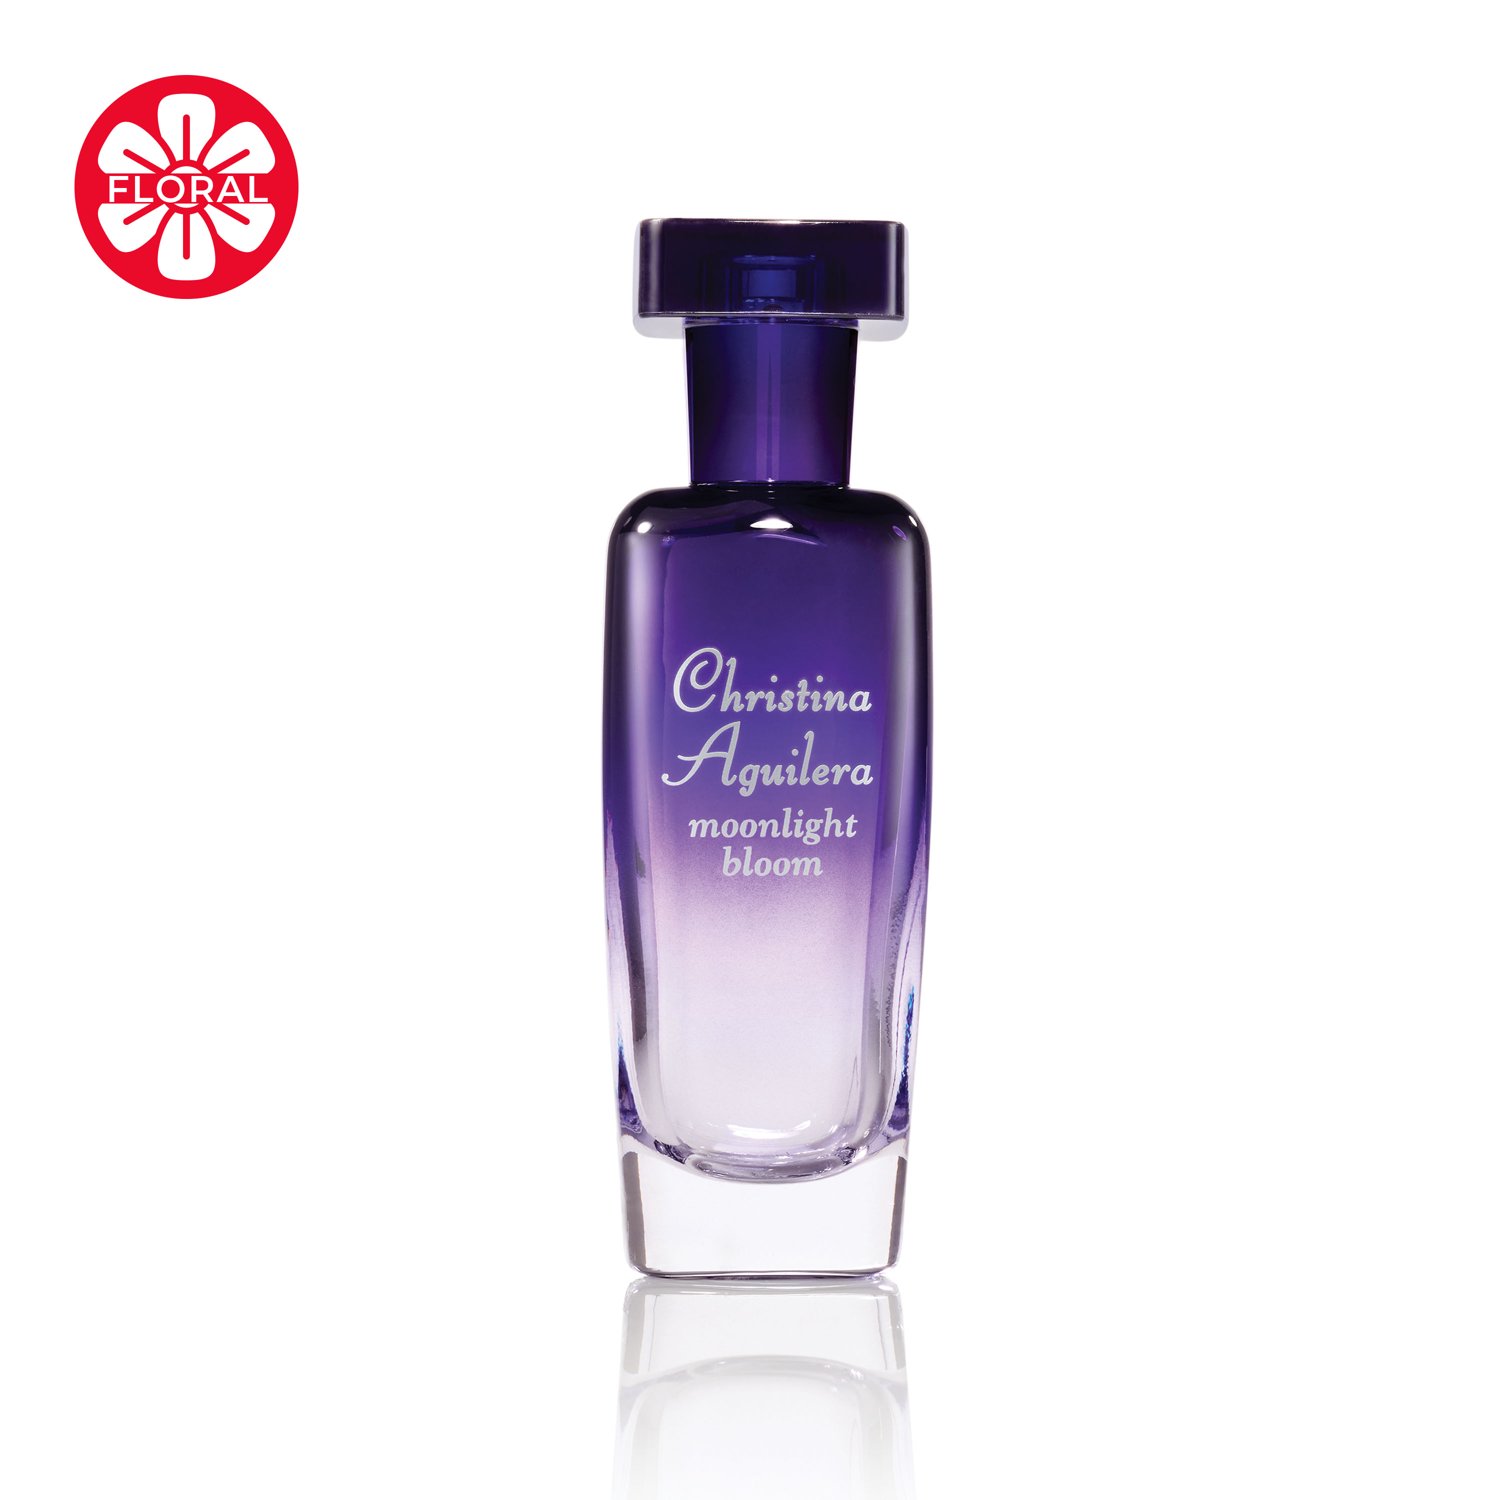 Christina Aguilera Moonlight Bloom Eau De Parfum, Perfume for Women, 1 Oz - image 1 of 7